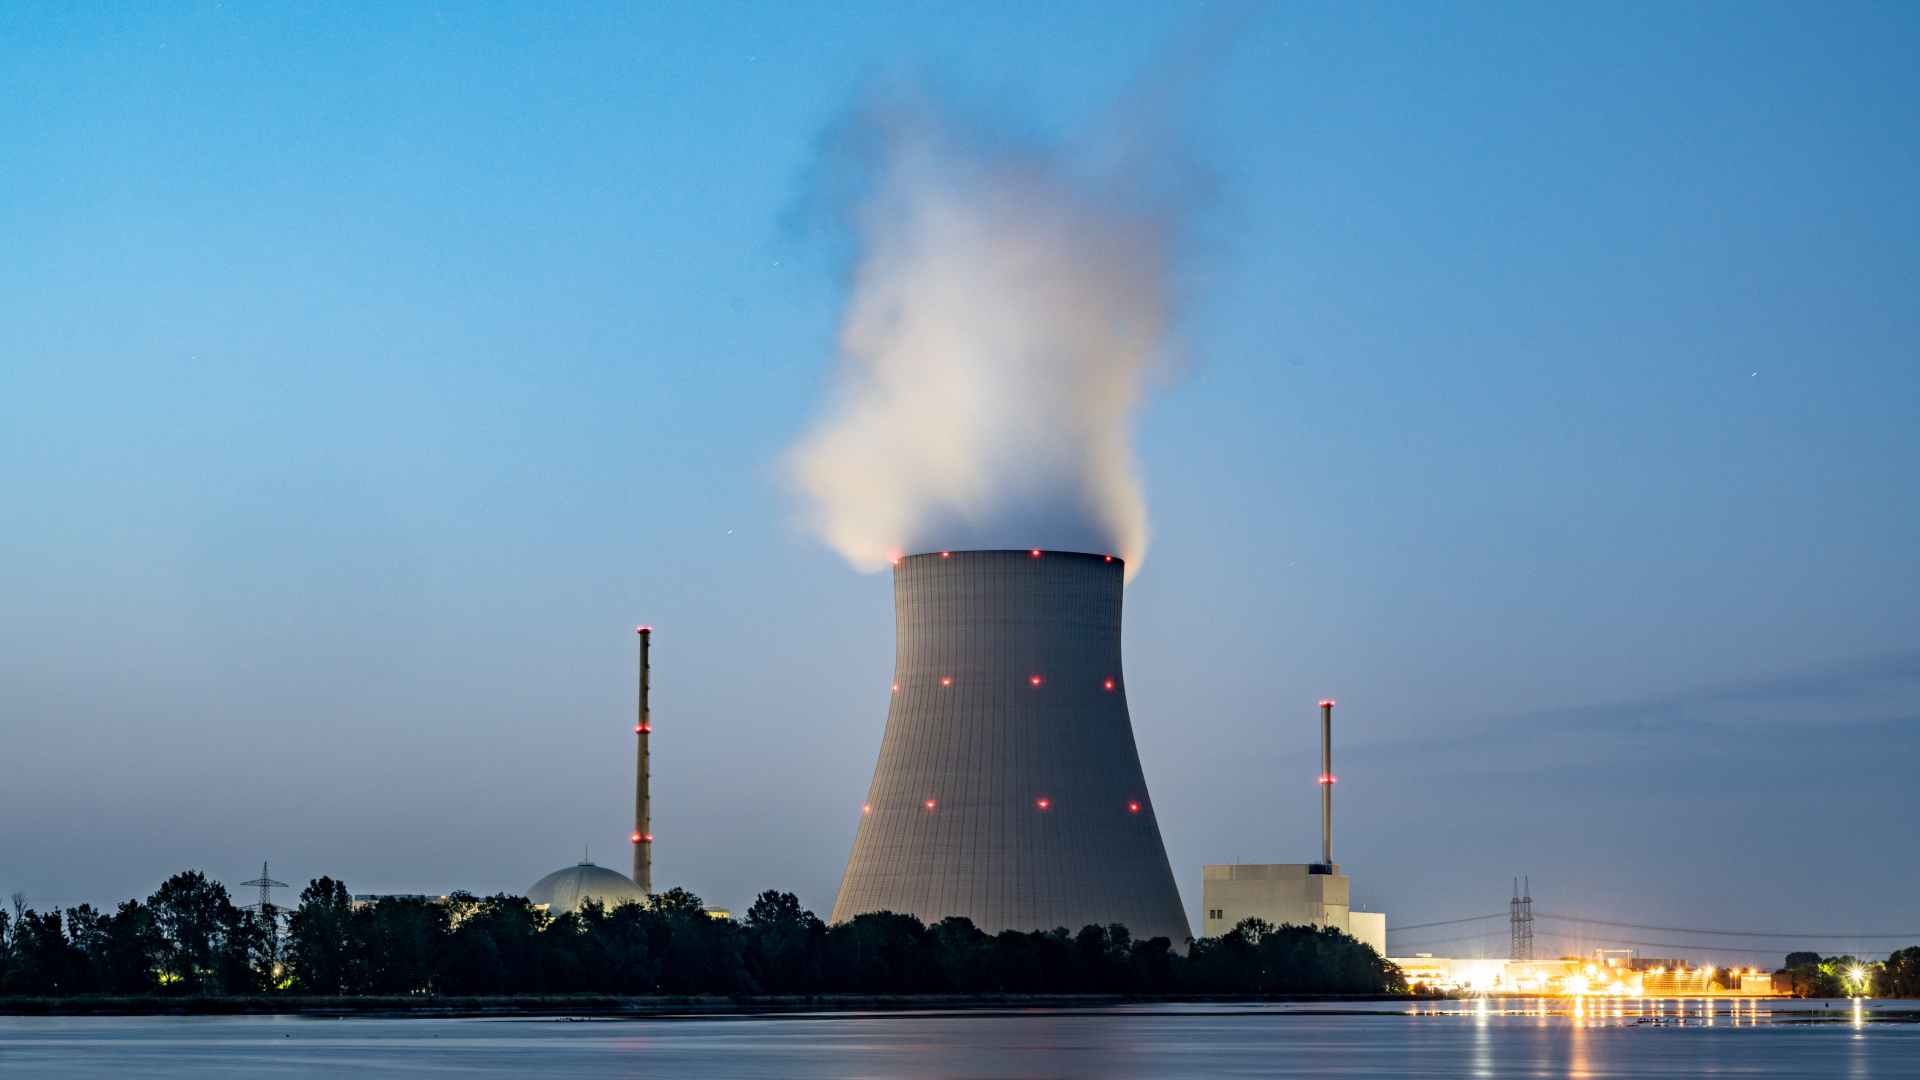 Dampf steigt aus dem Kühlturm des Atomkraftwerks Isar 2 | dpa